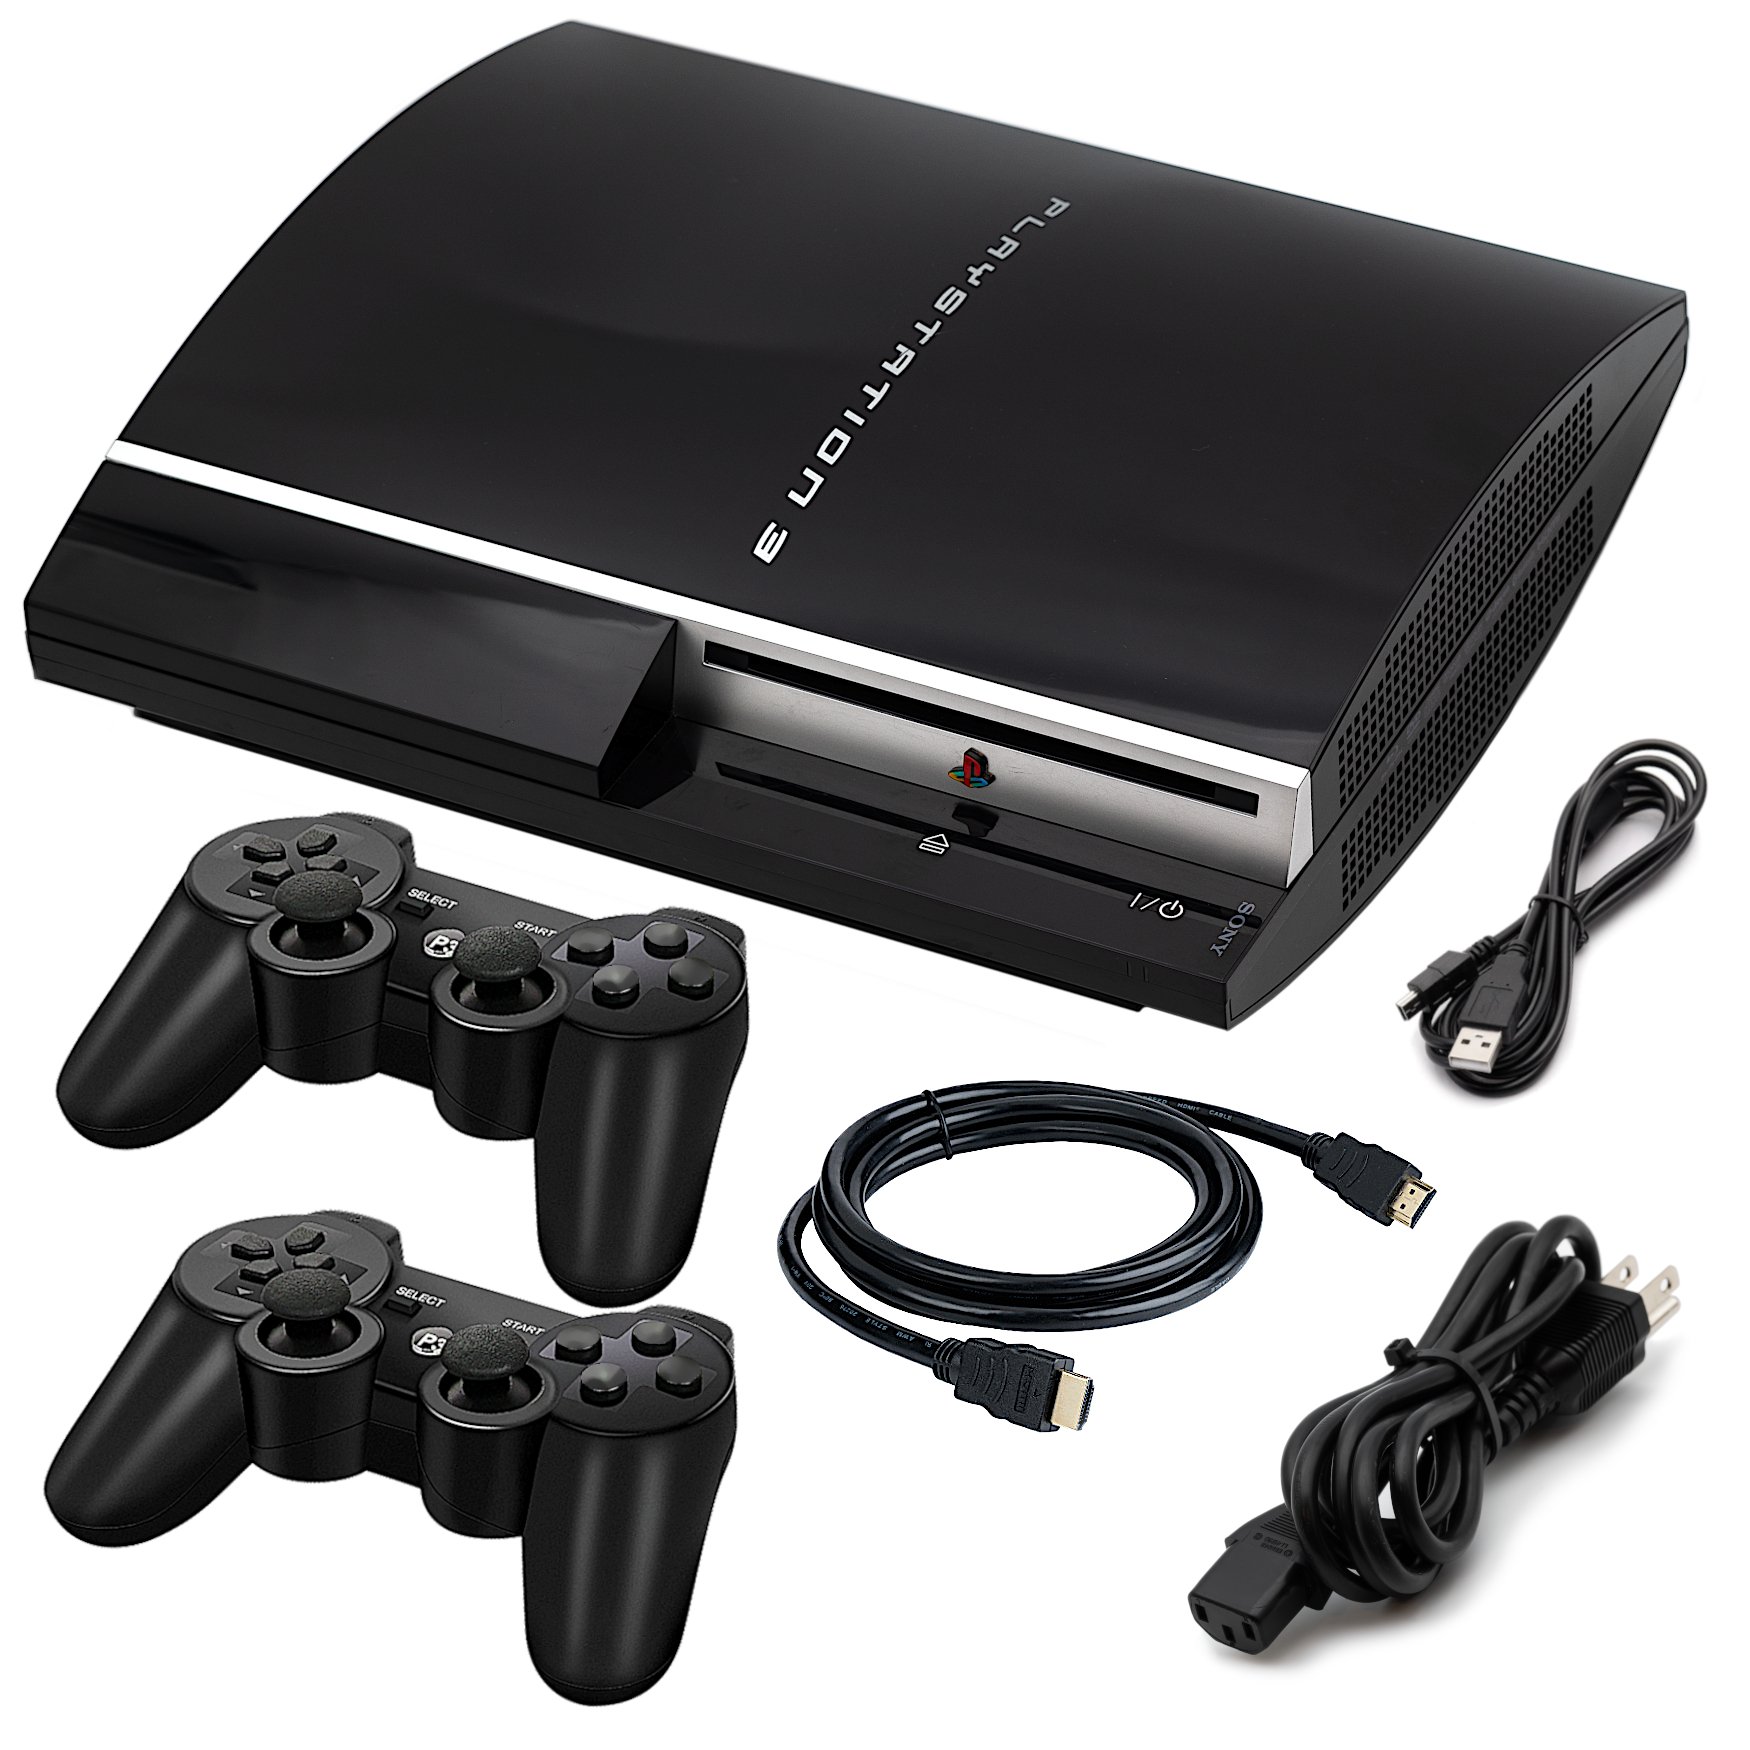  Sony Playstation 3 160GB System : Videojuegos